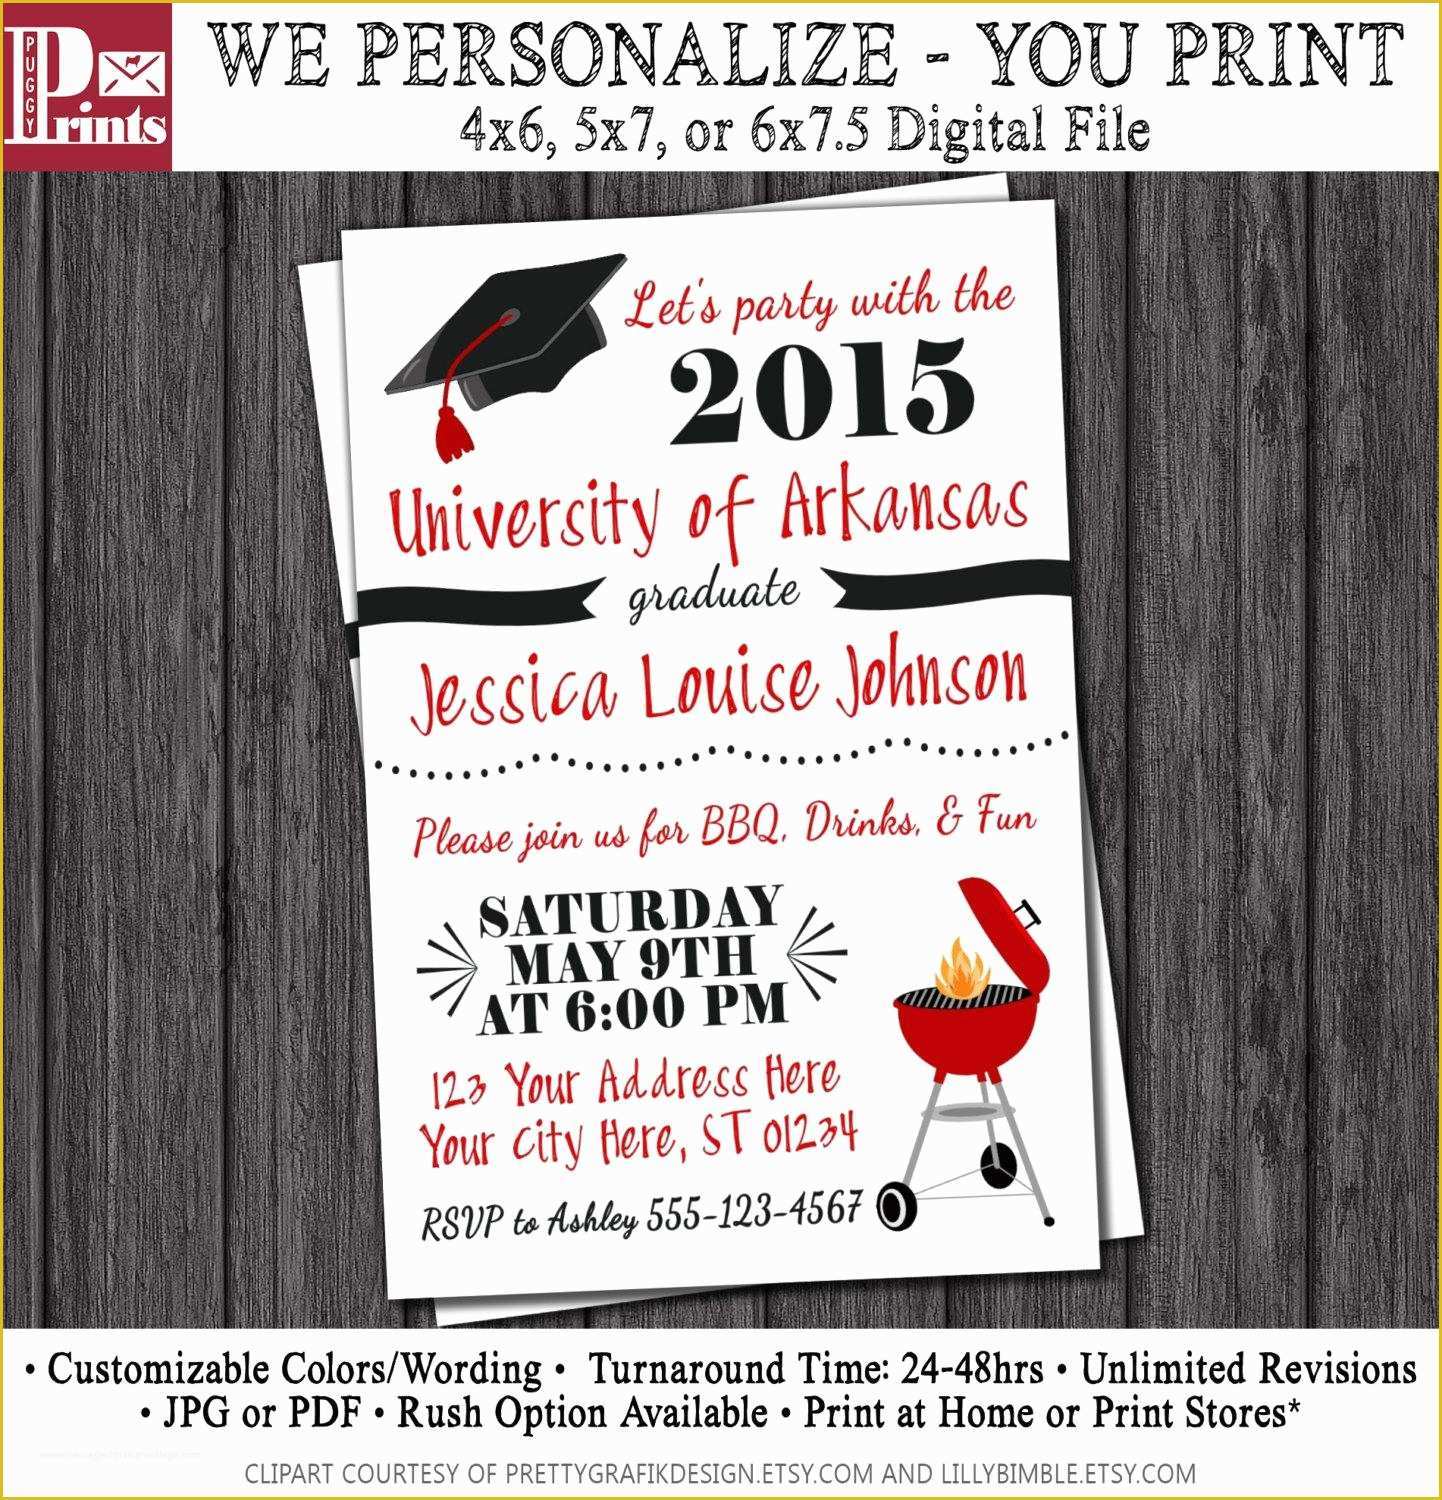 College Graduation Party Invitations Templates Free Of College Graduation Party Invitations